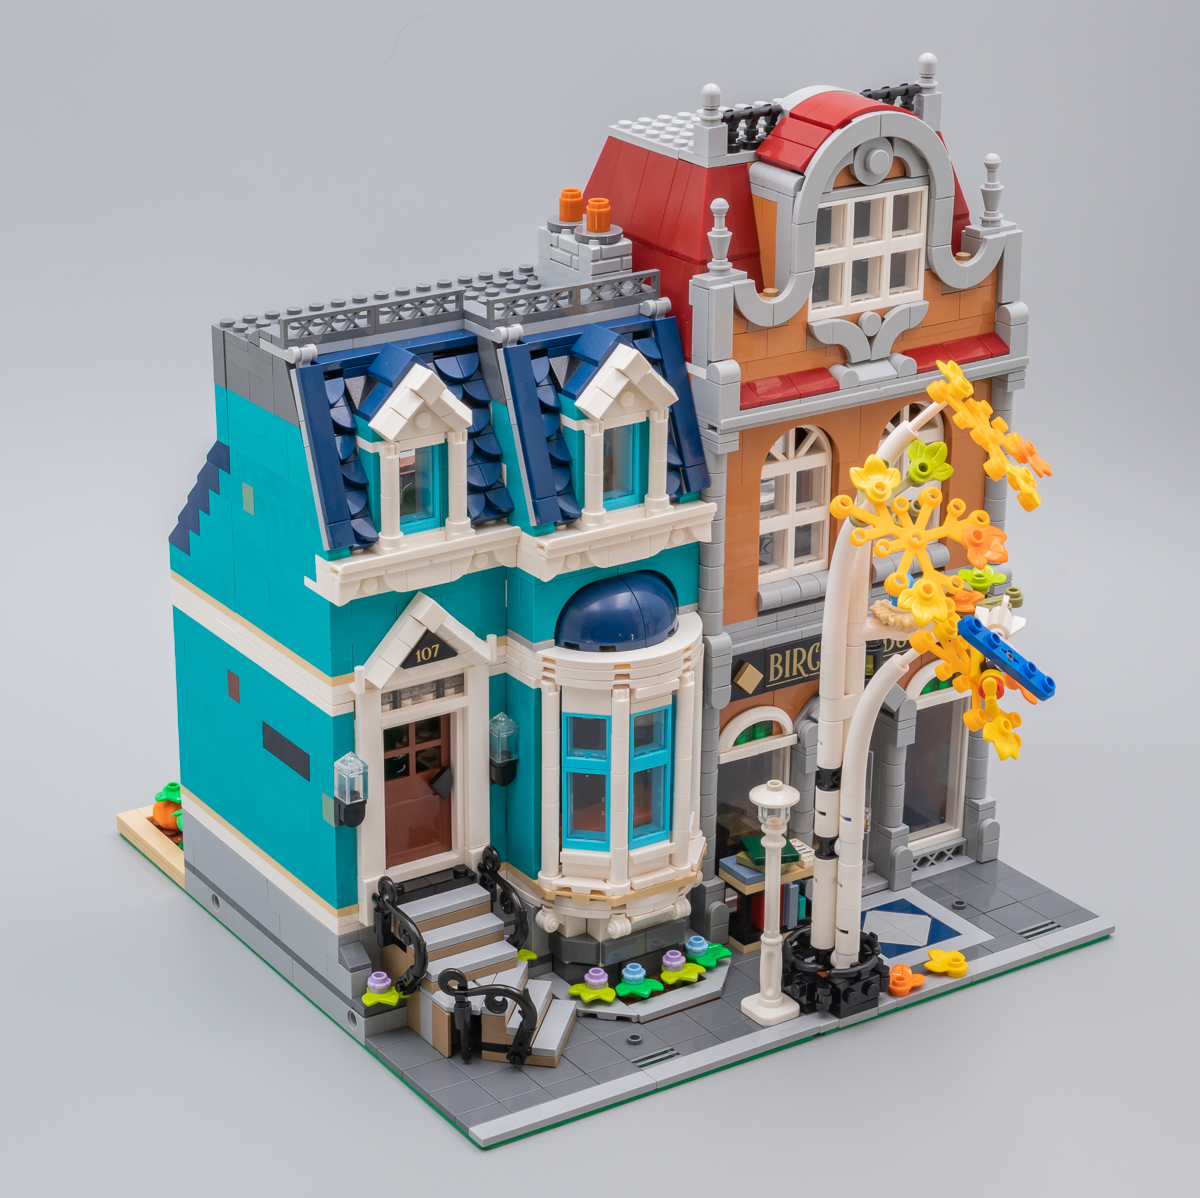 LEGO Creator 10270 pas cher, La librairie (Modular)